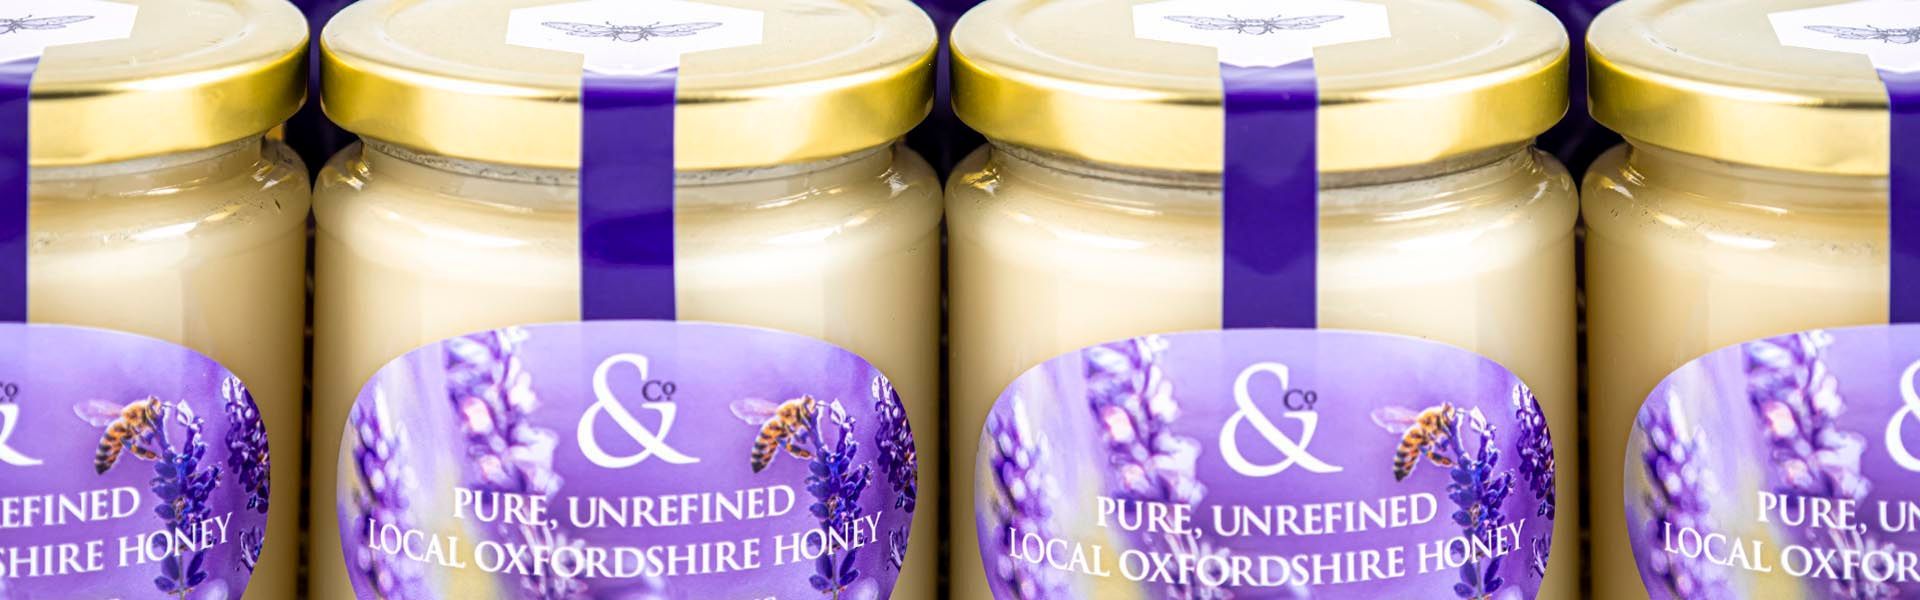 several jars of pure unrefined local oxfordshire honey